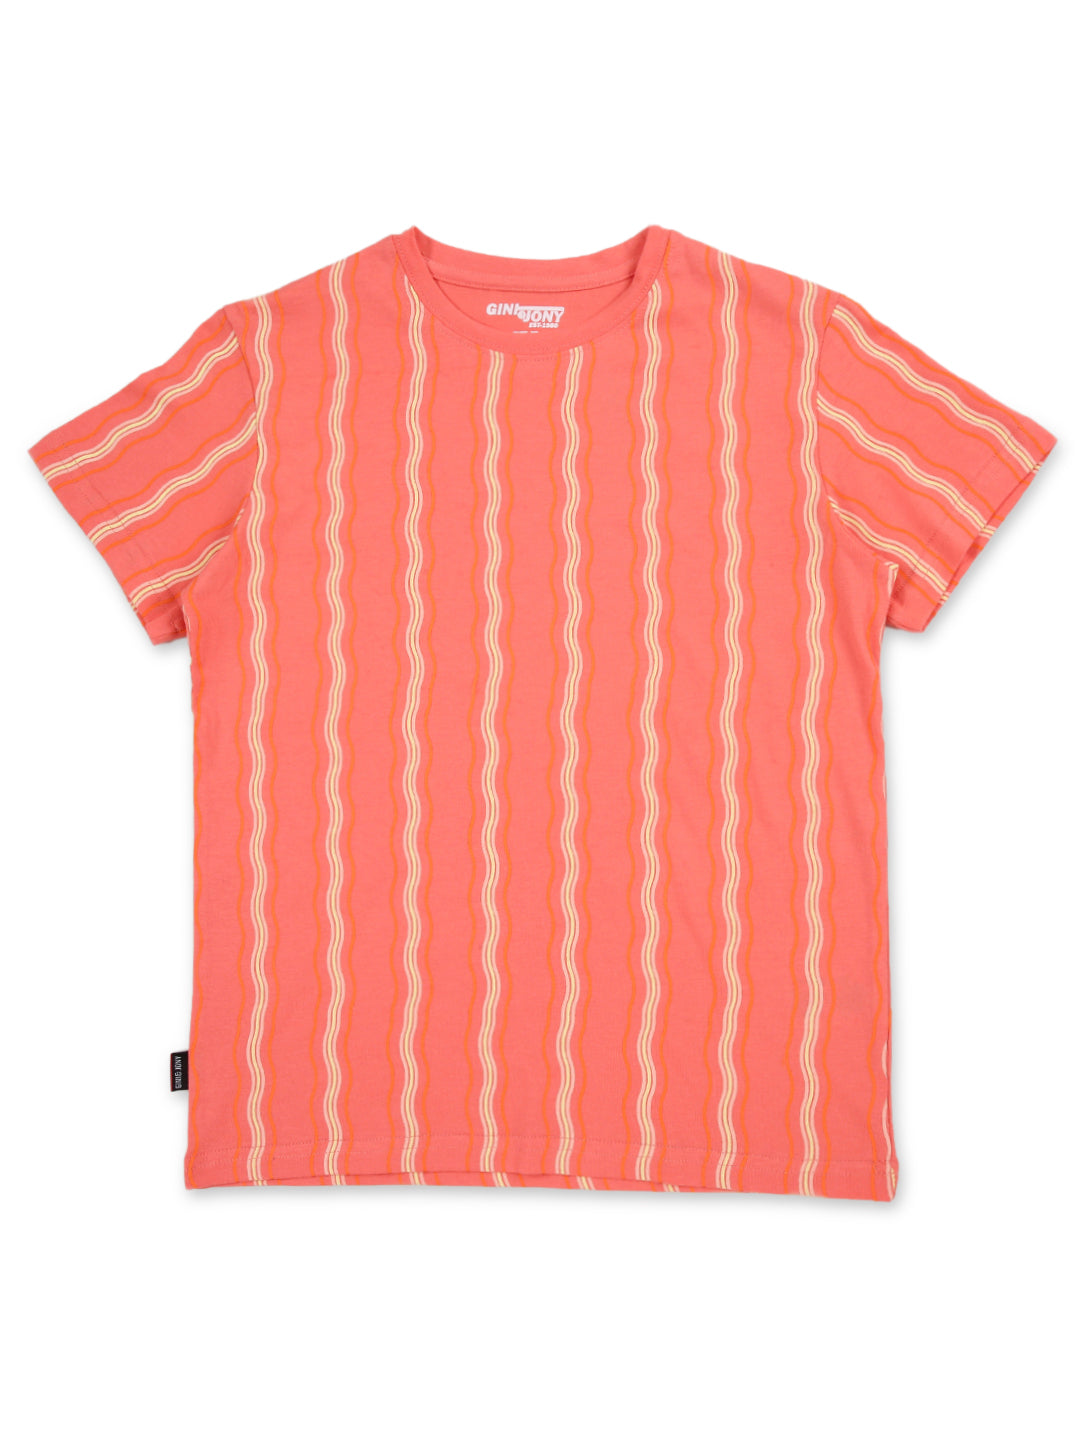 Boys Coral Cotton Printed T-Shirt